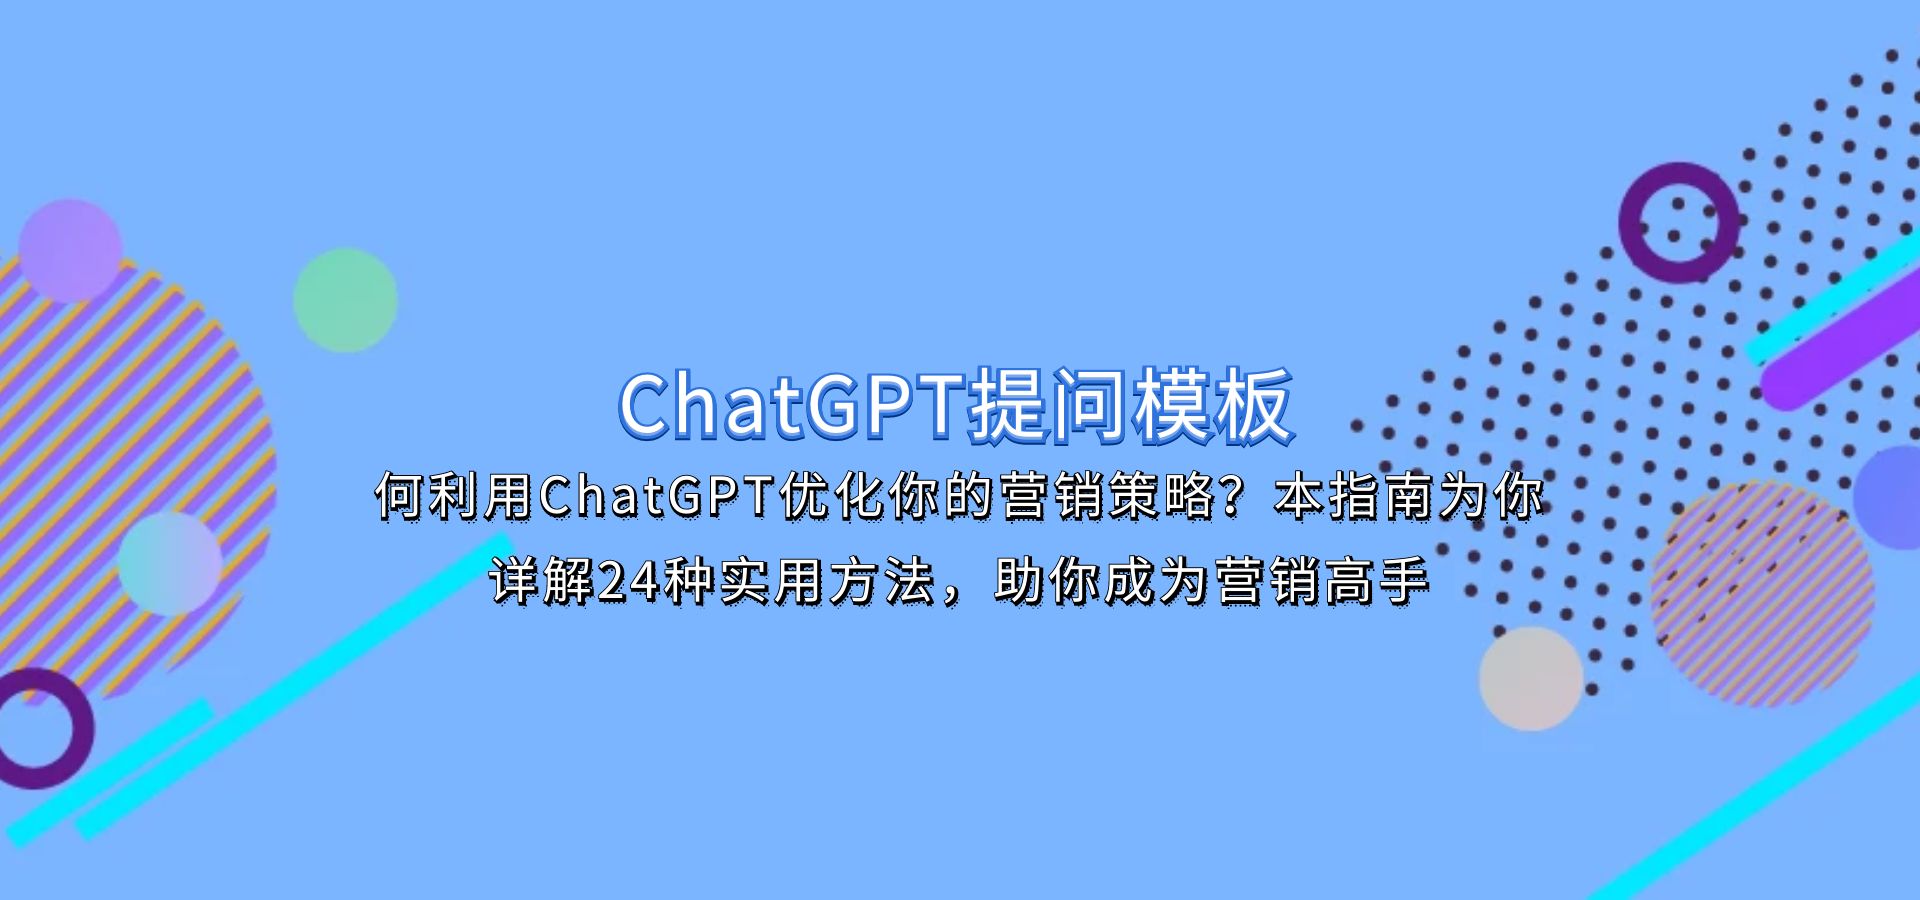 ChatGPT提问模板